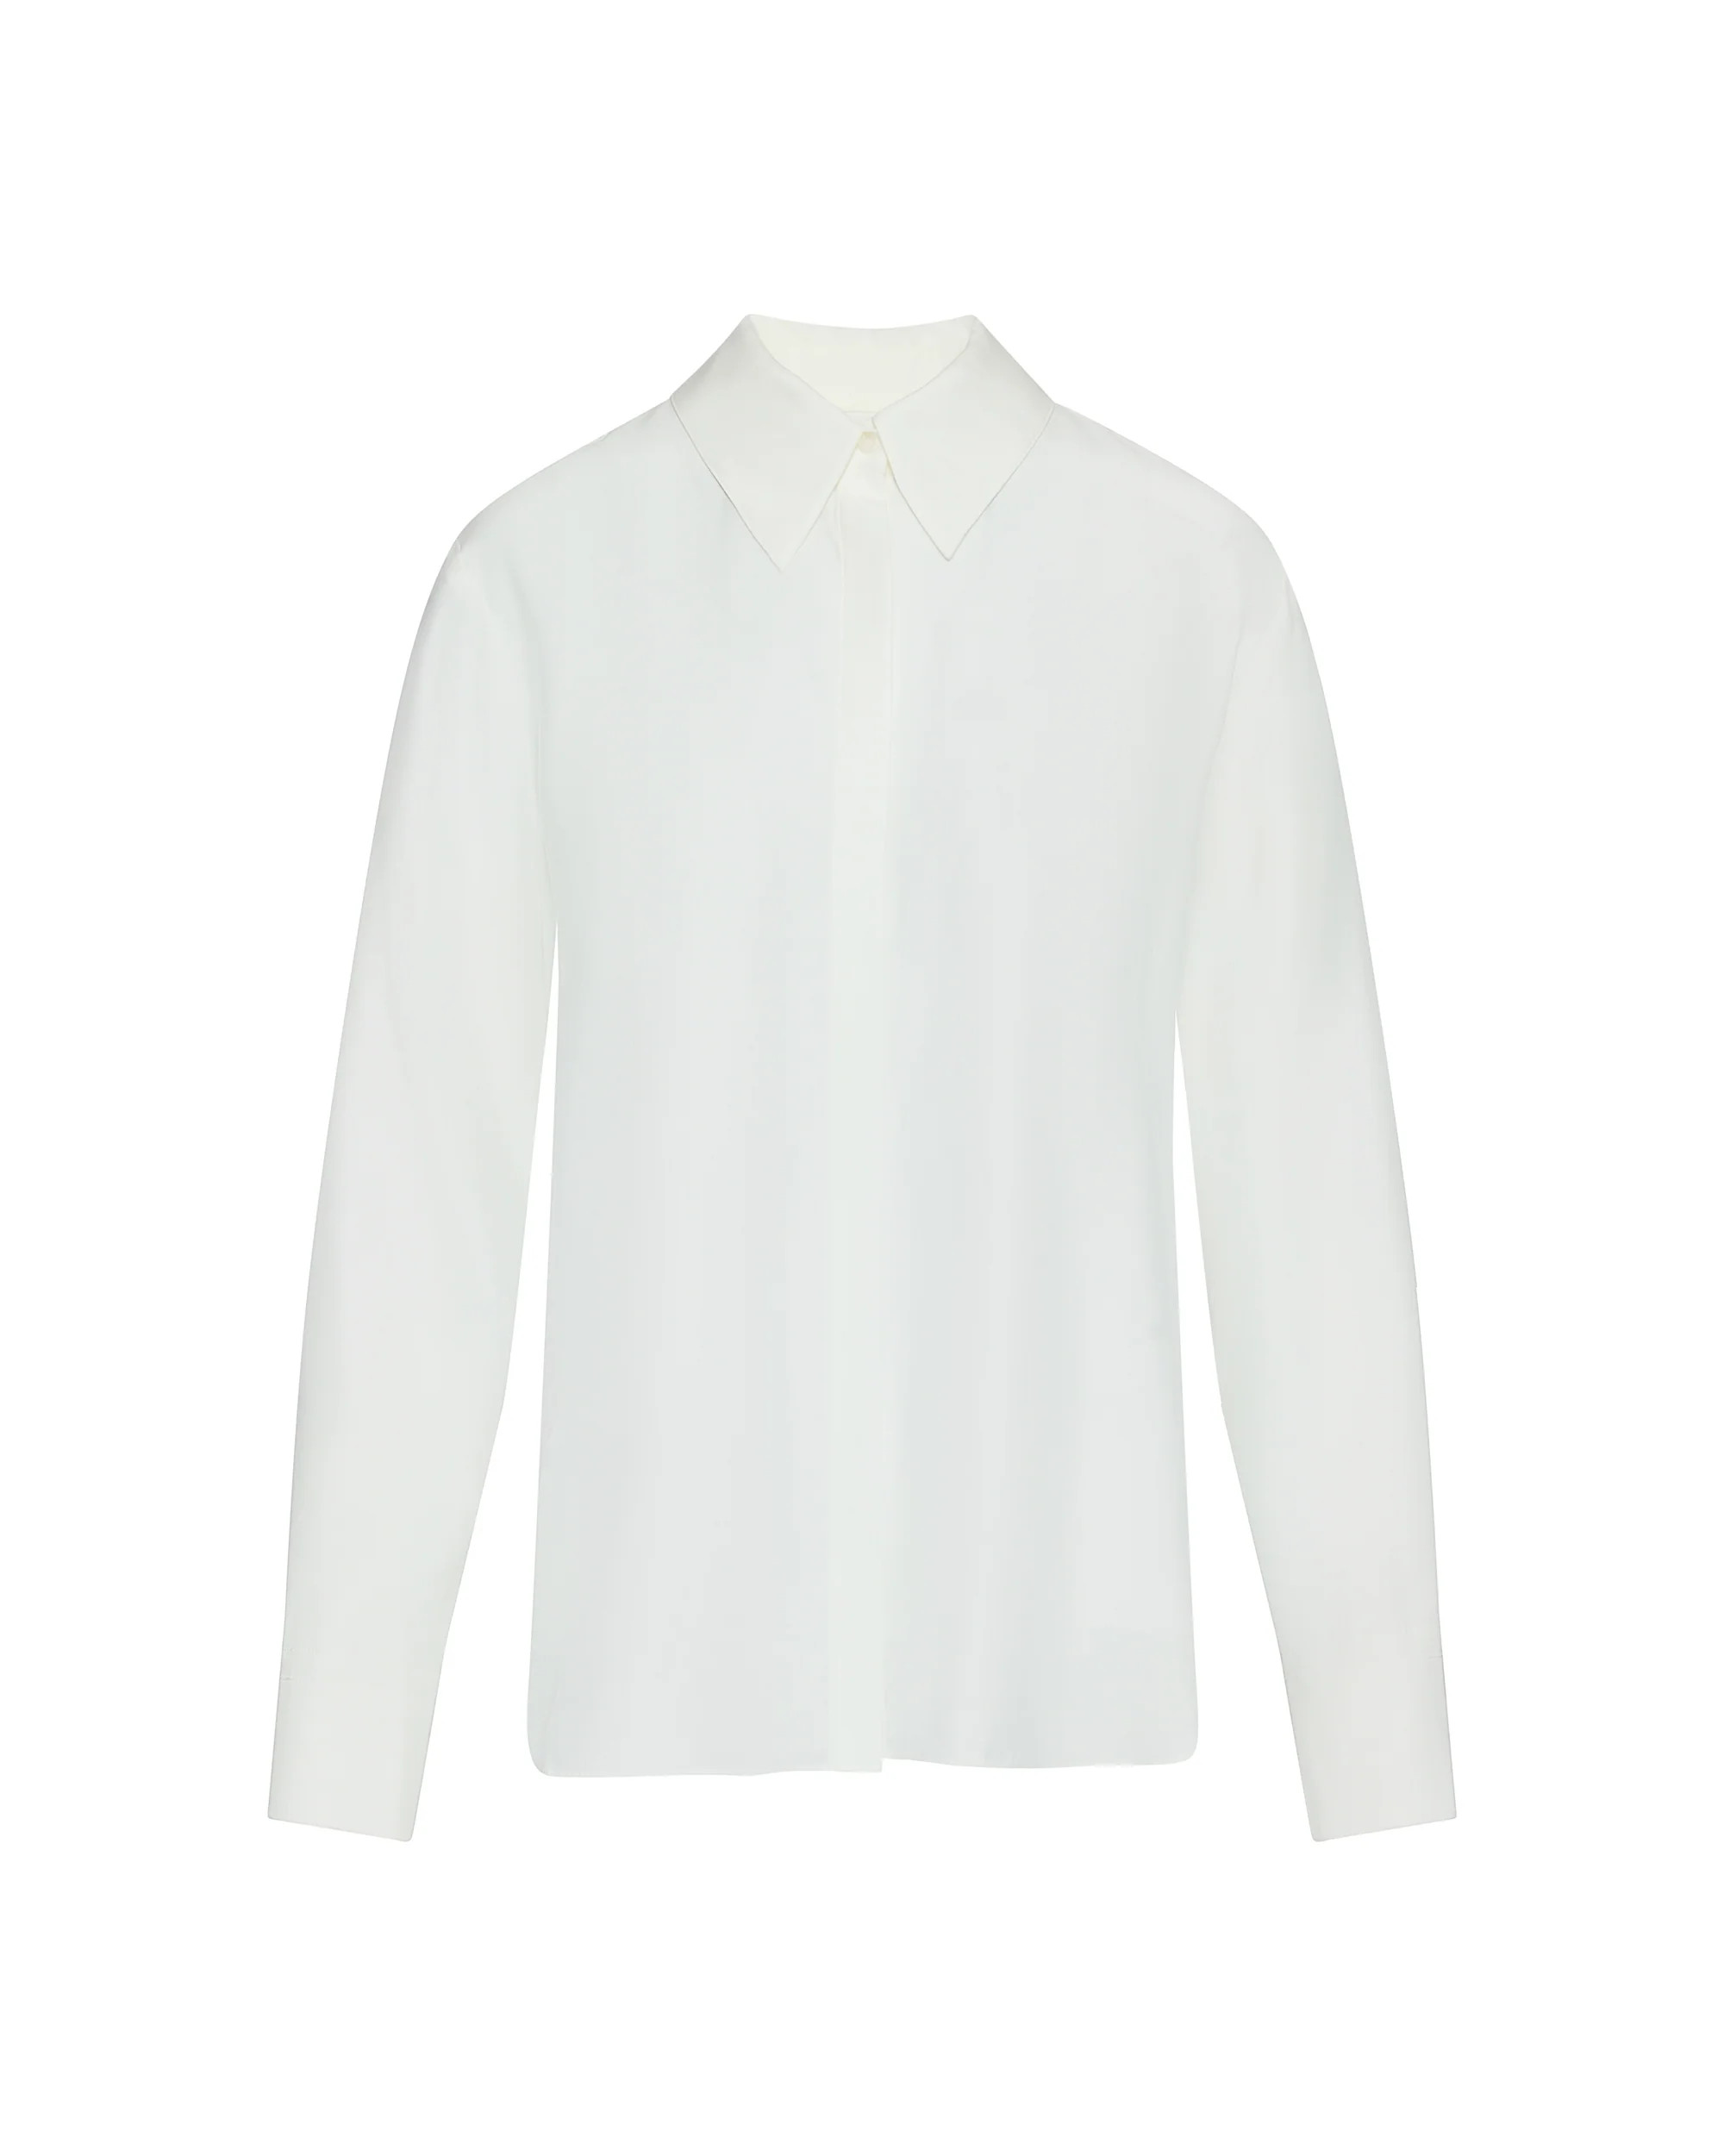 Argent: Collared Shirt in Matte-side Silk Satin | Women's Tops | Argent | Argent